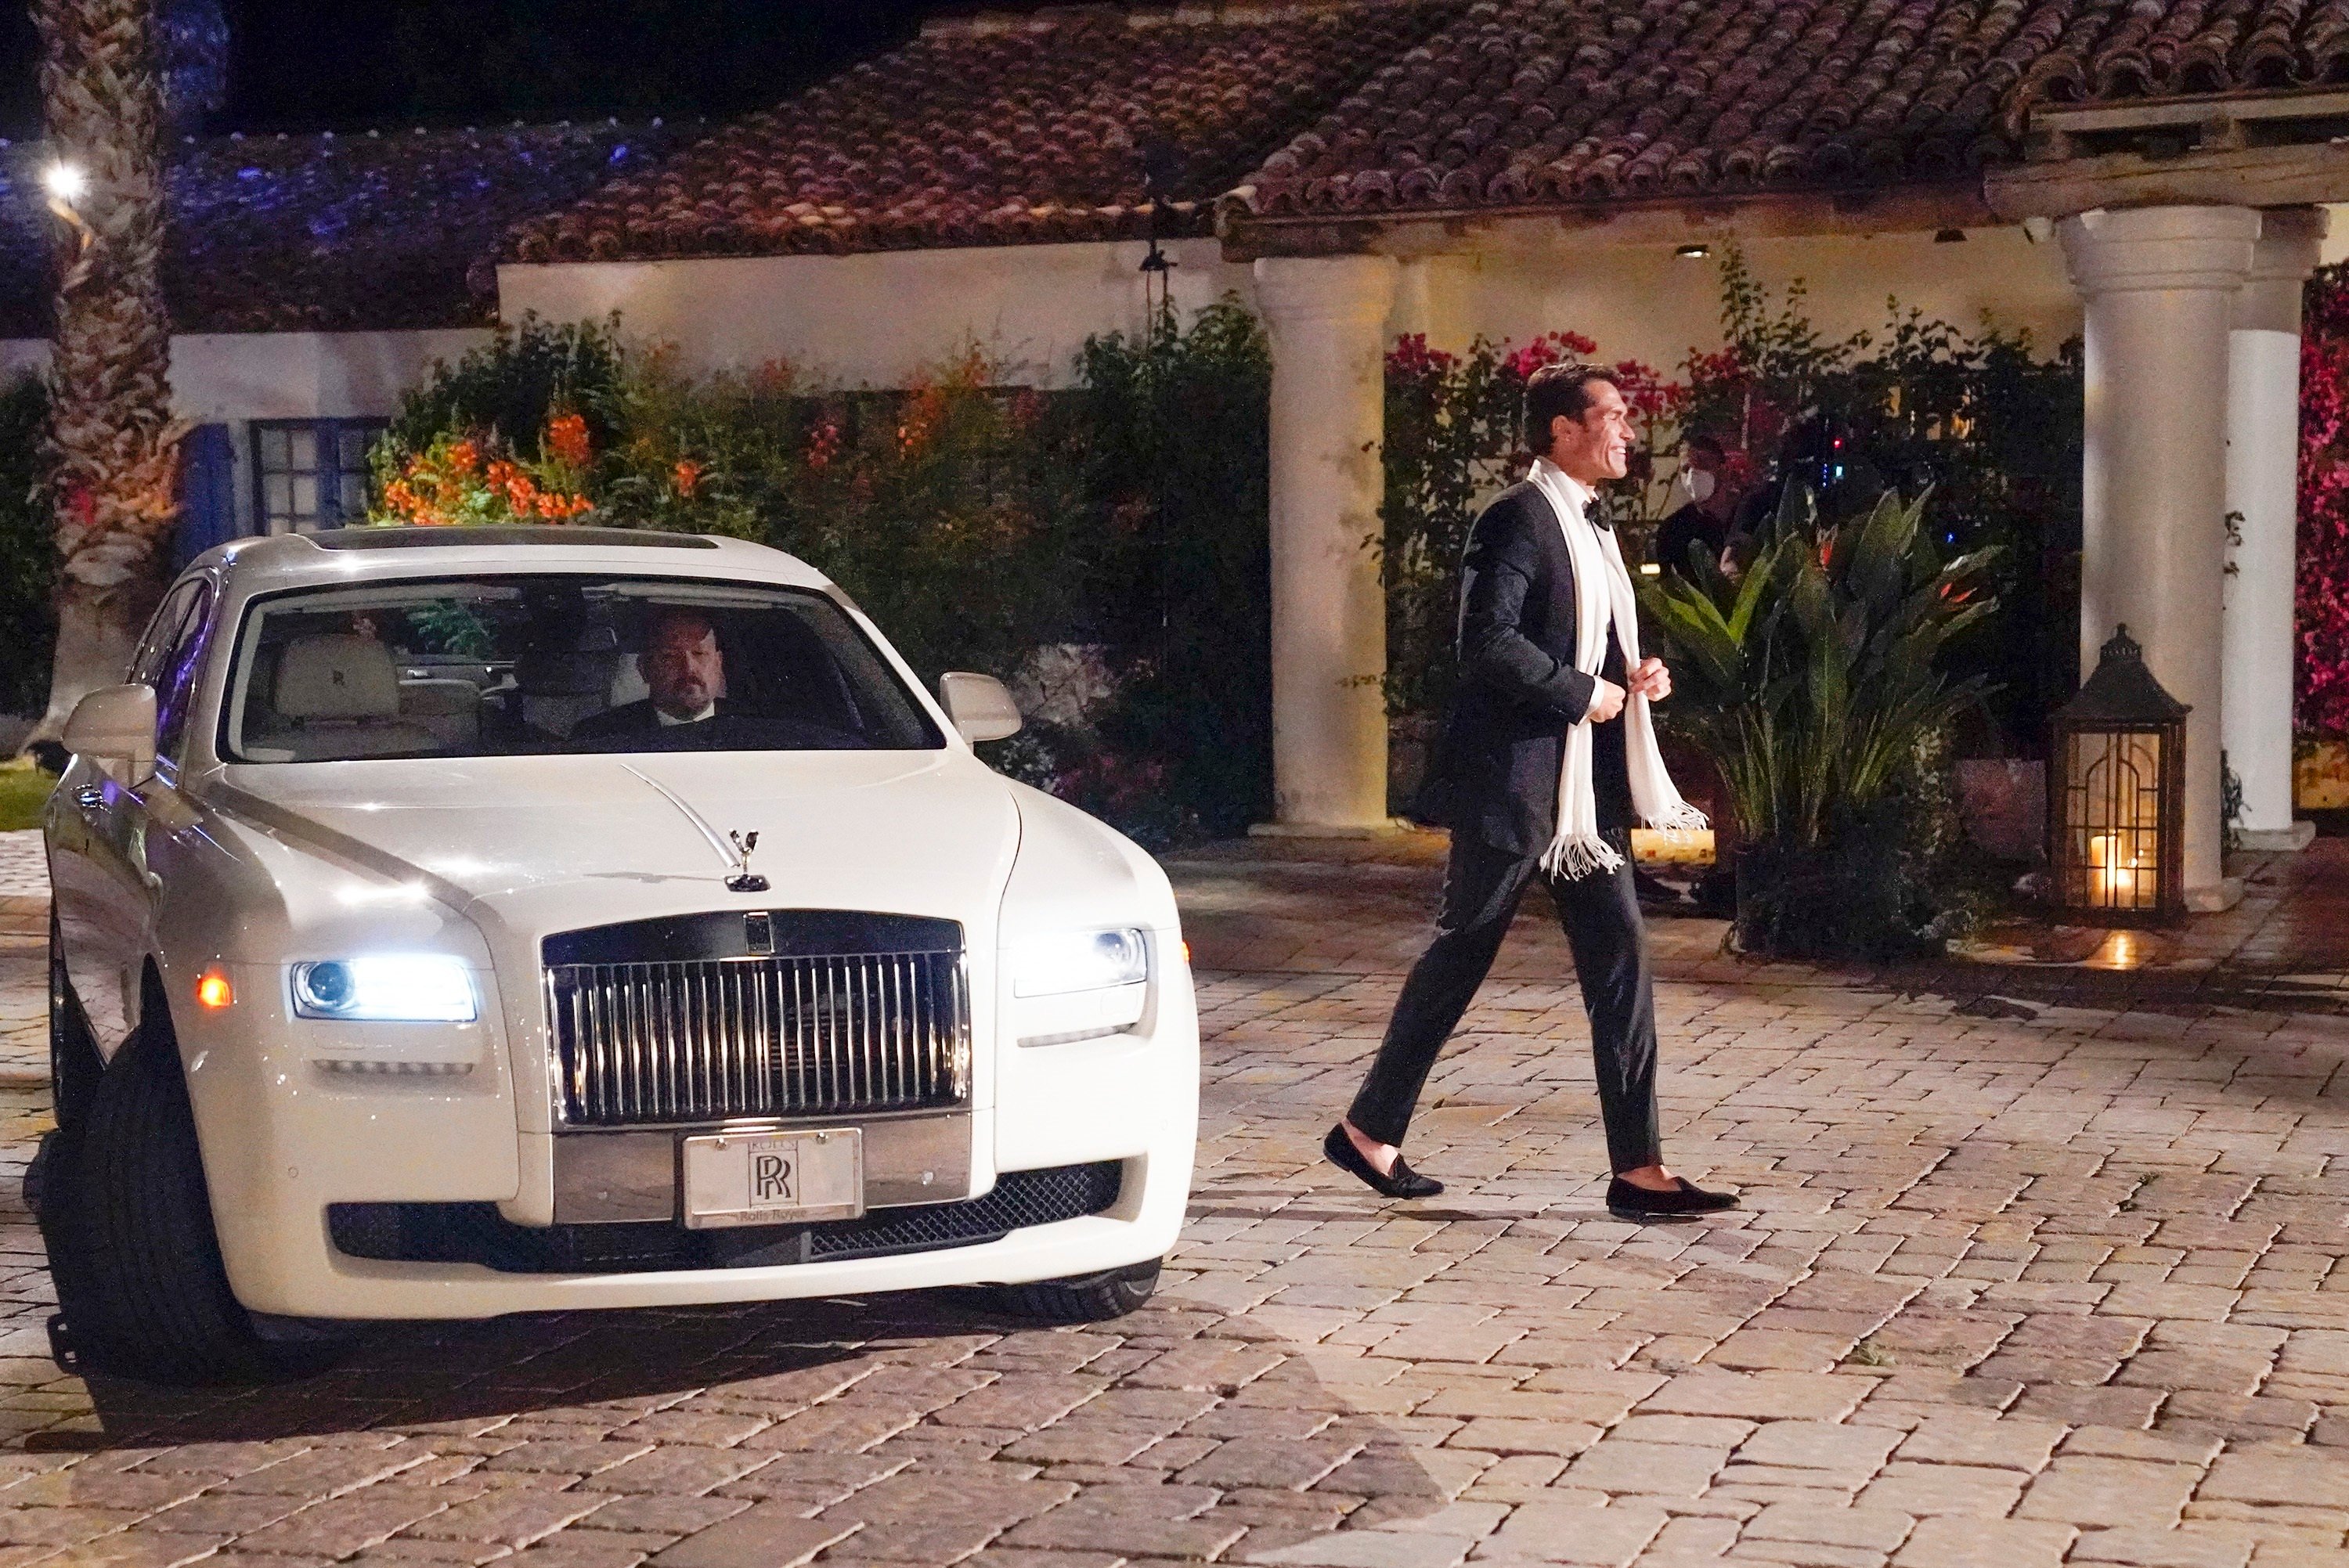 'The Bachelorette' contestant Bennett Jordan getting out of his Rolls Royce